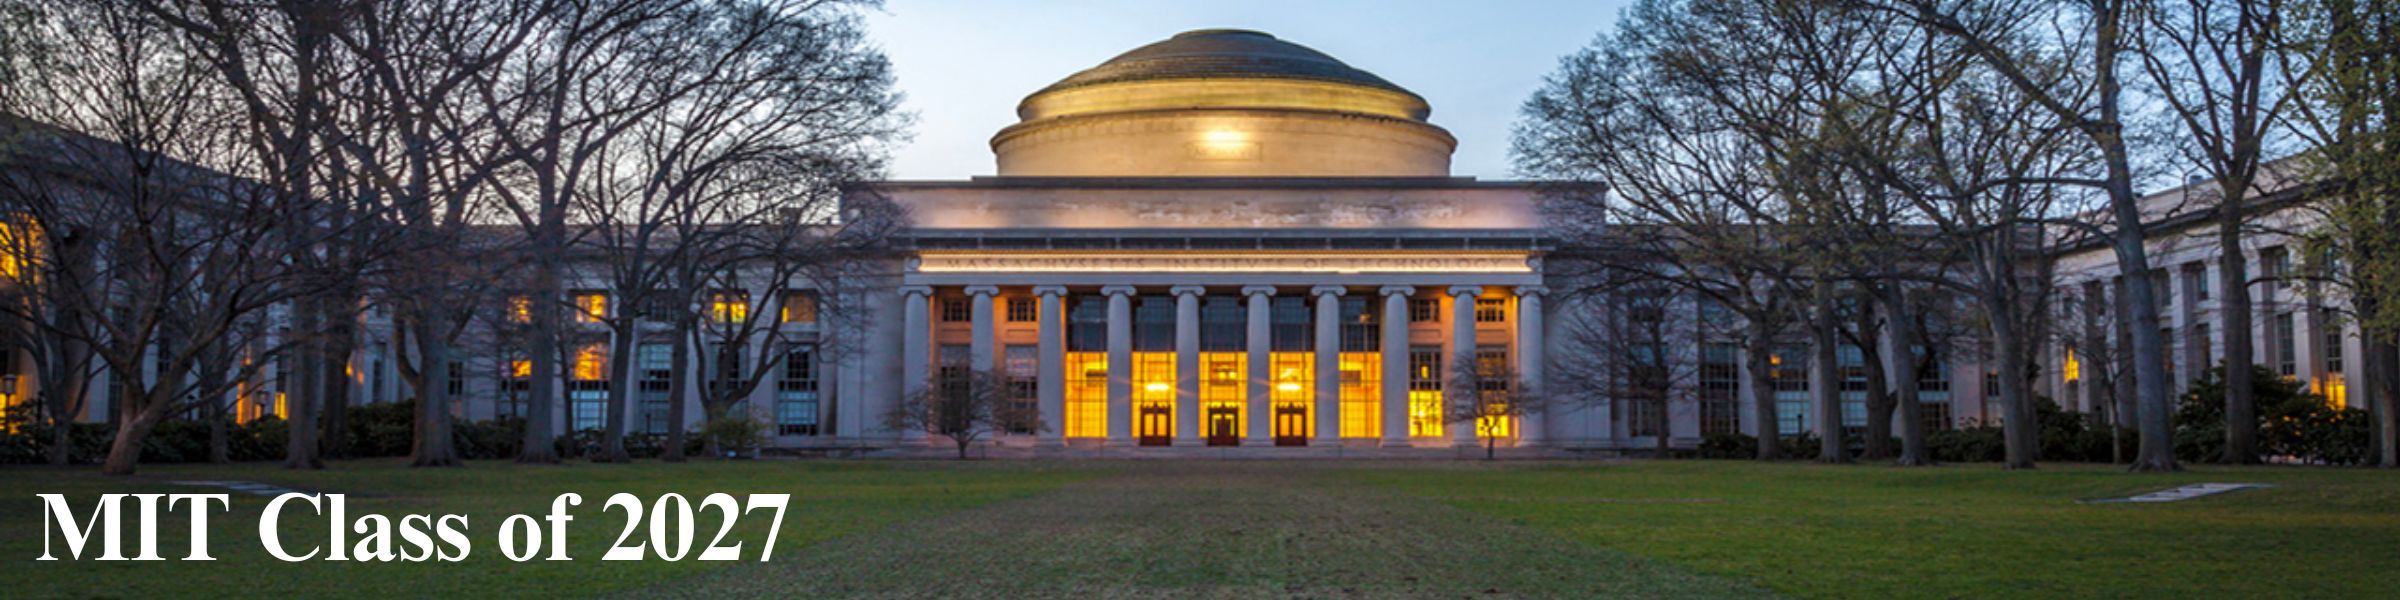 MIT Class of 2027